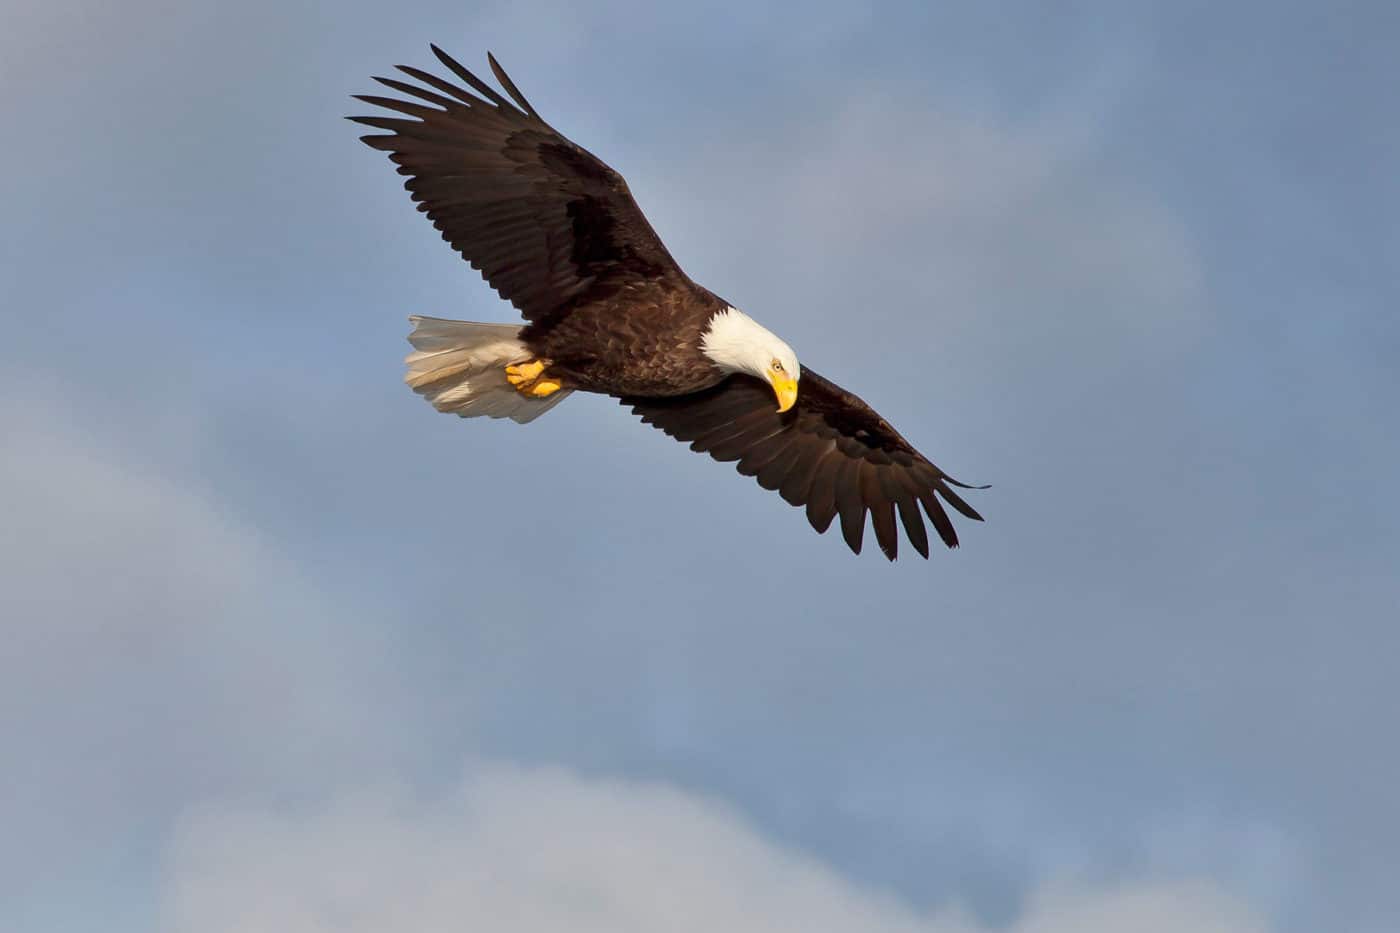 Eagle soars through the sky.